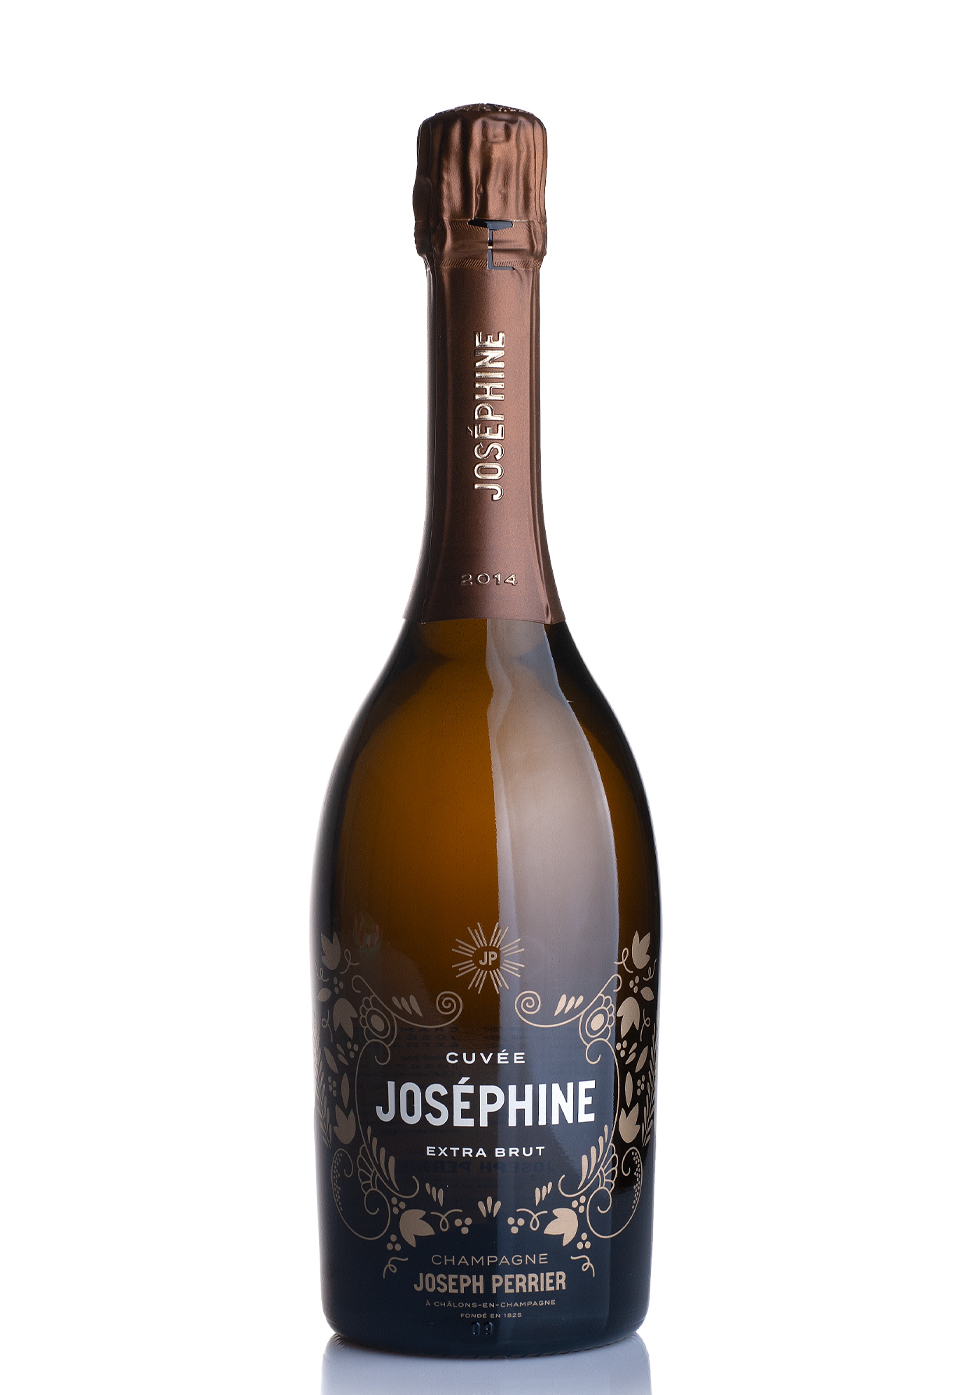 Champagne Joseph Perrier Cuvee Josephine Extra Brut 2014 (0.75L)